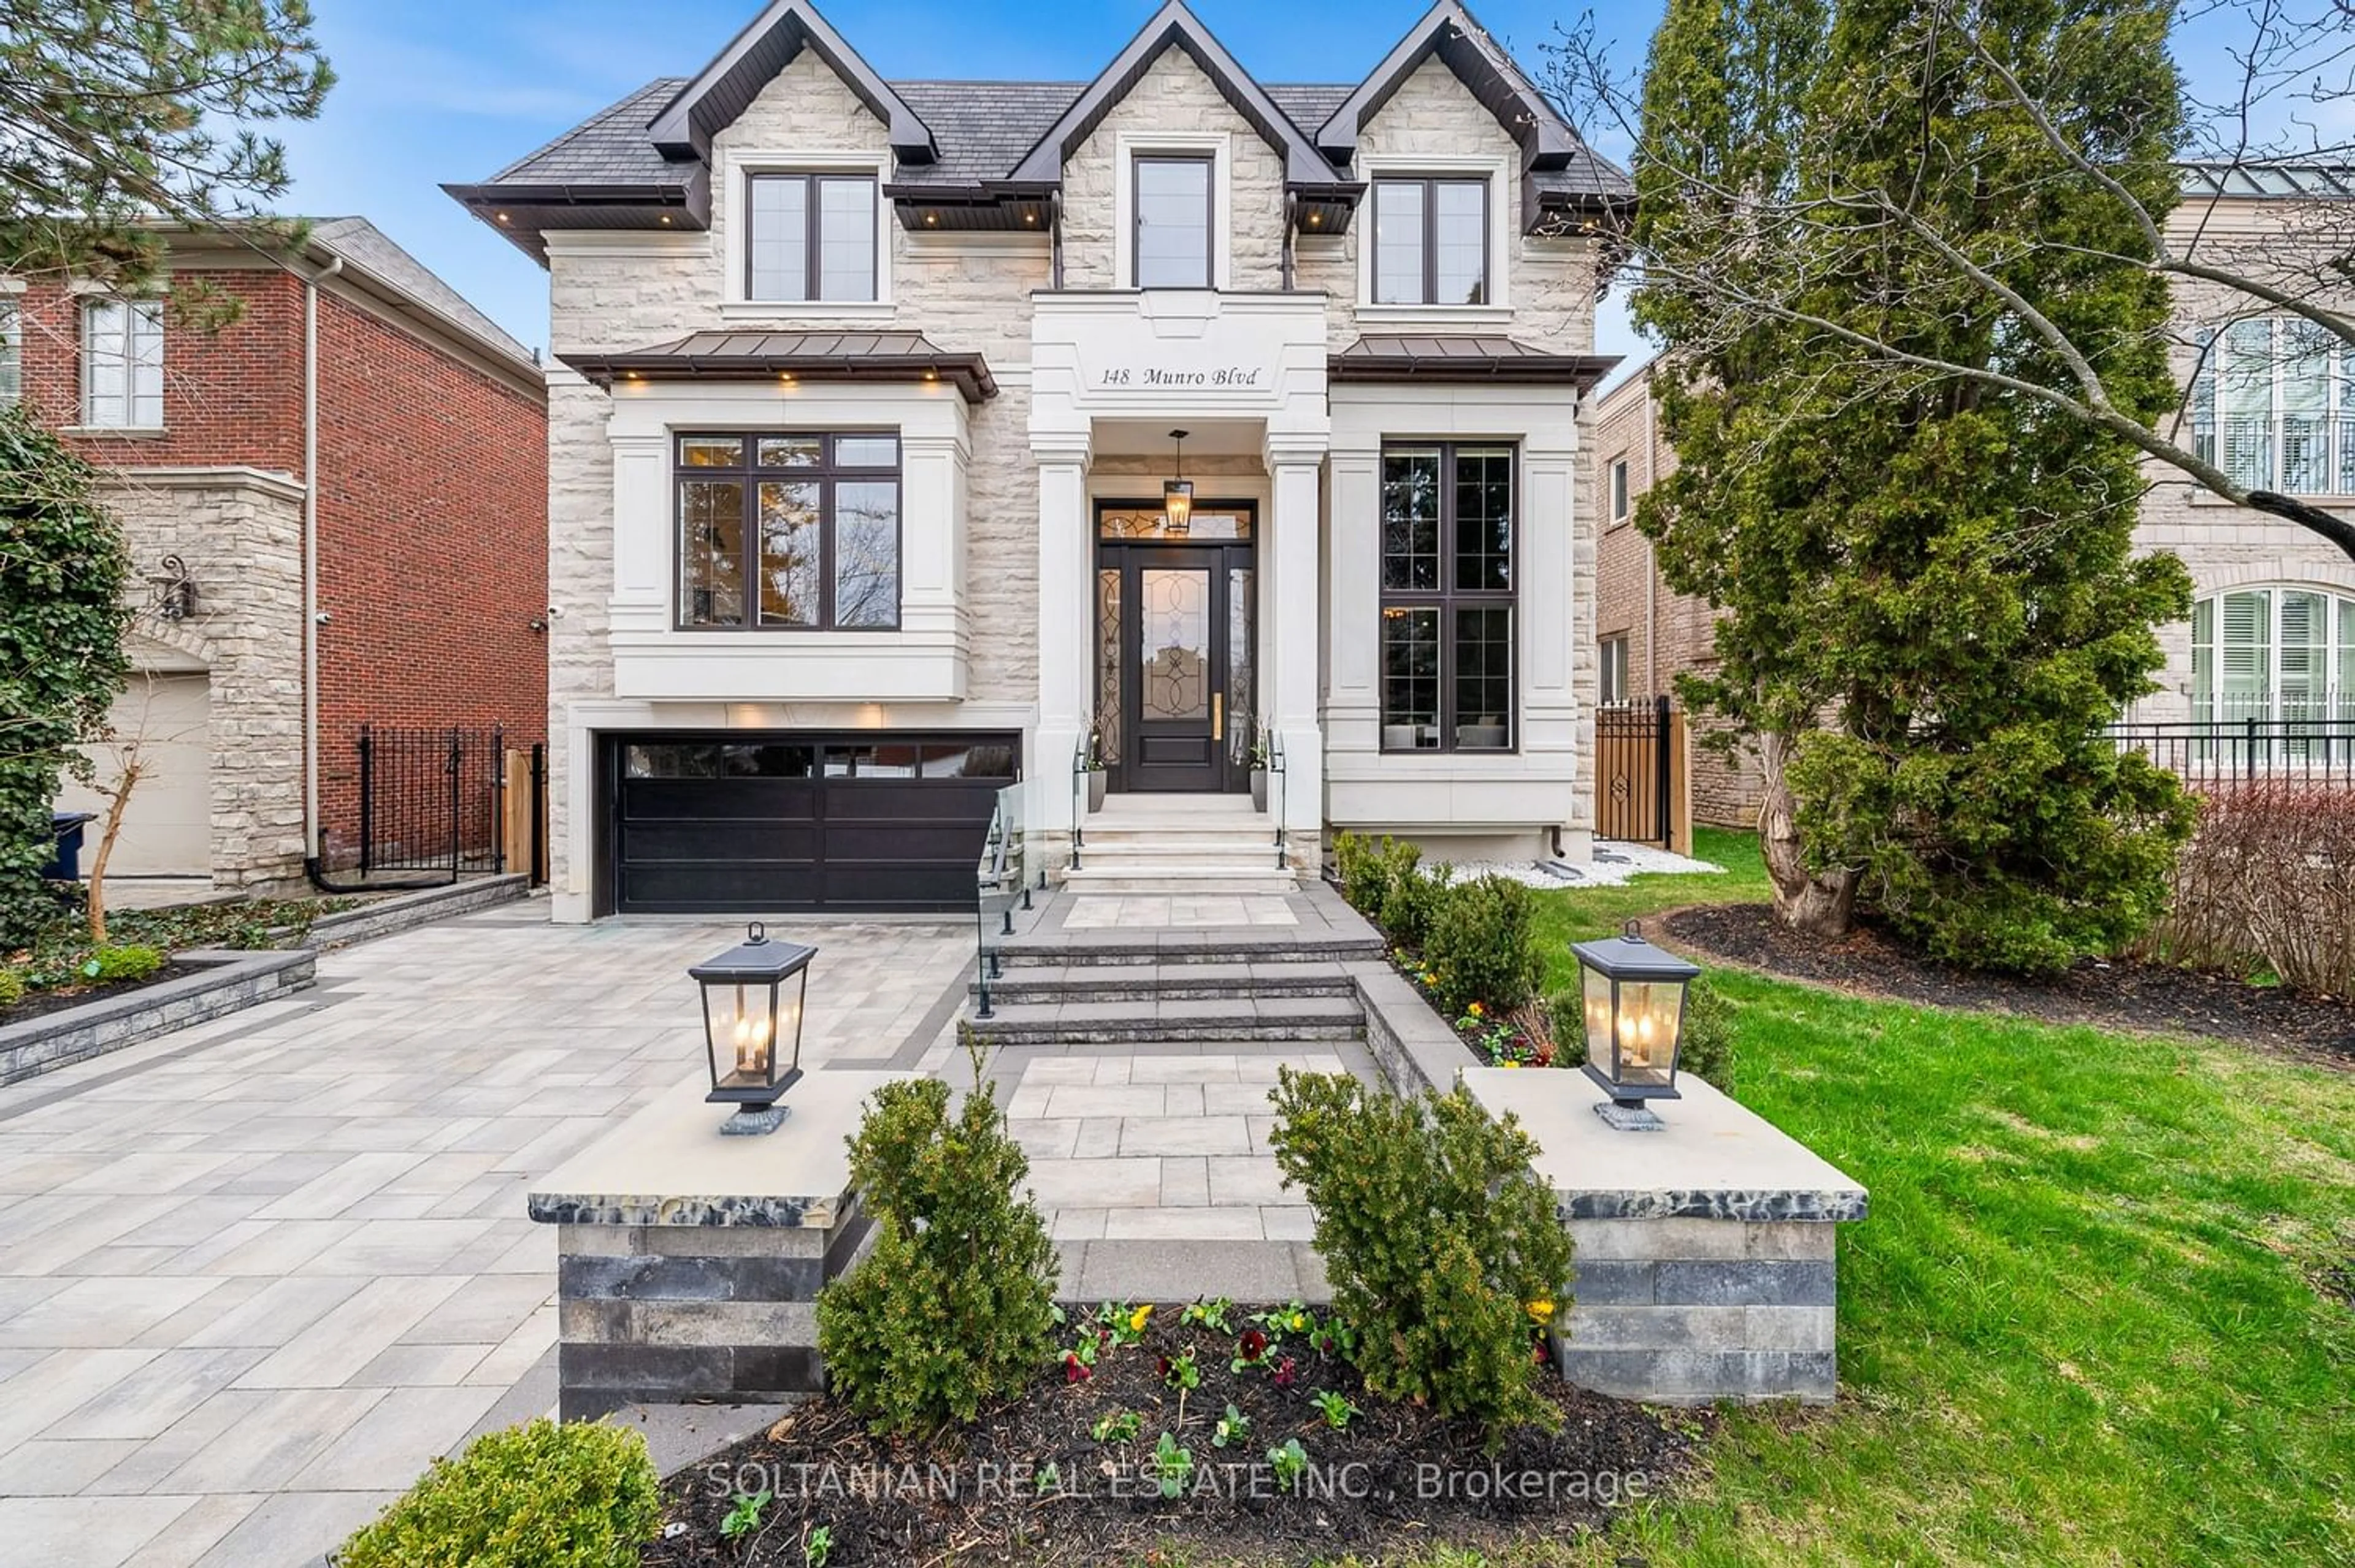 Home with brick exterior material for 148 Munro Blvd, Toronto Ontario M2P 1C8